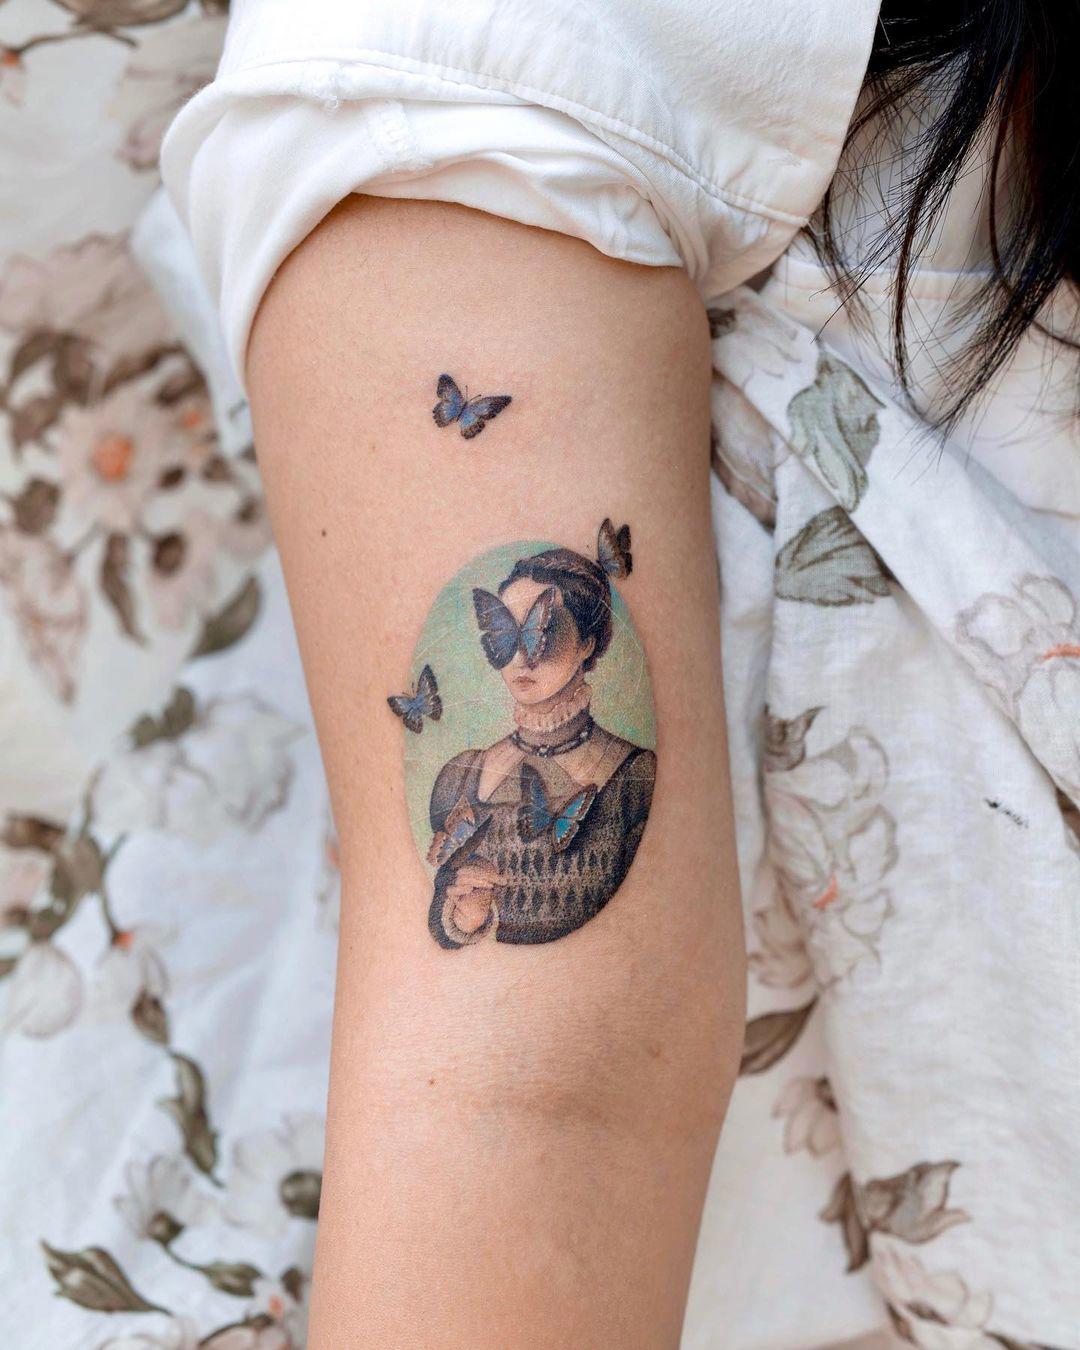 Tatuaje inspirado en la ilustración de Christian Schloe